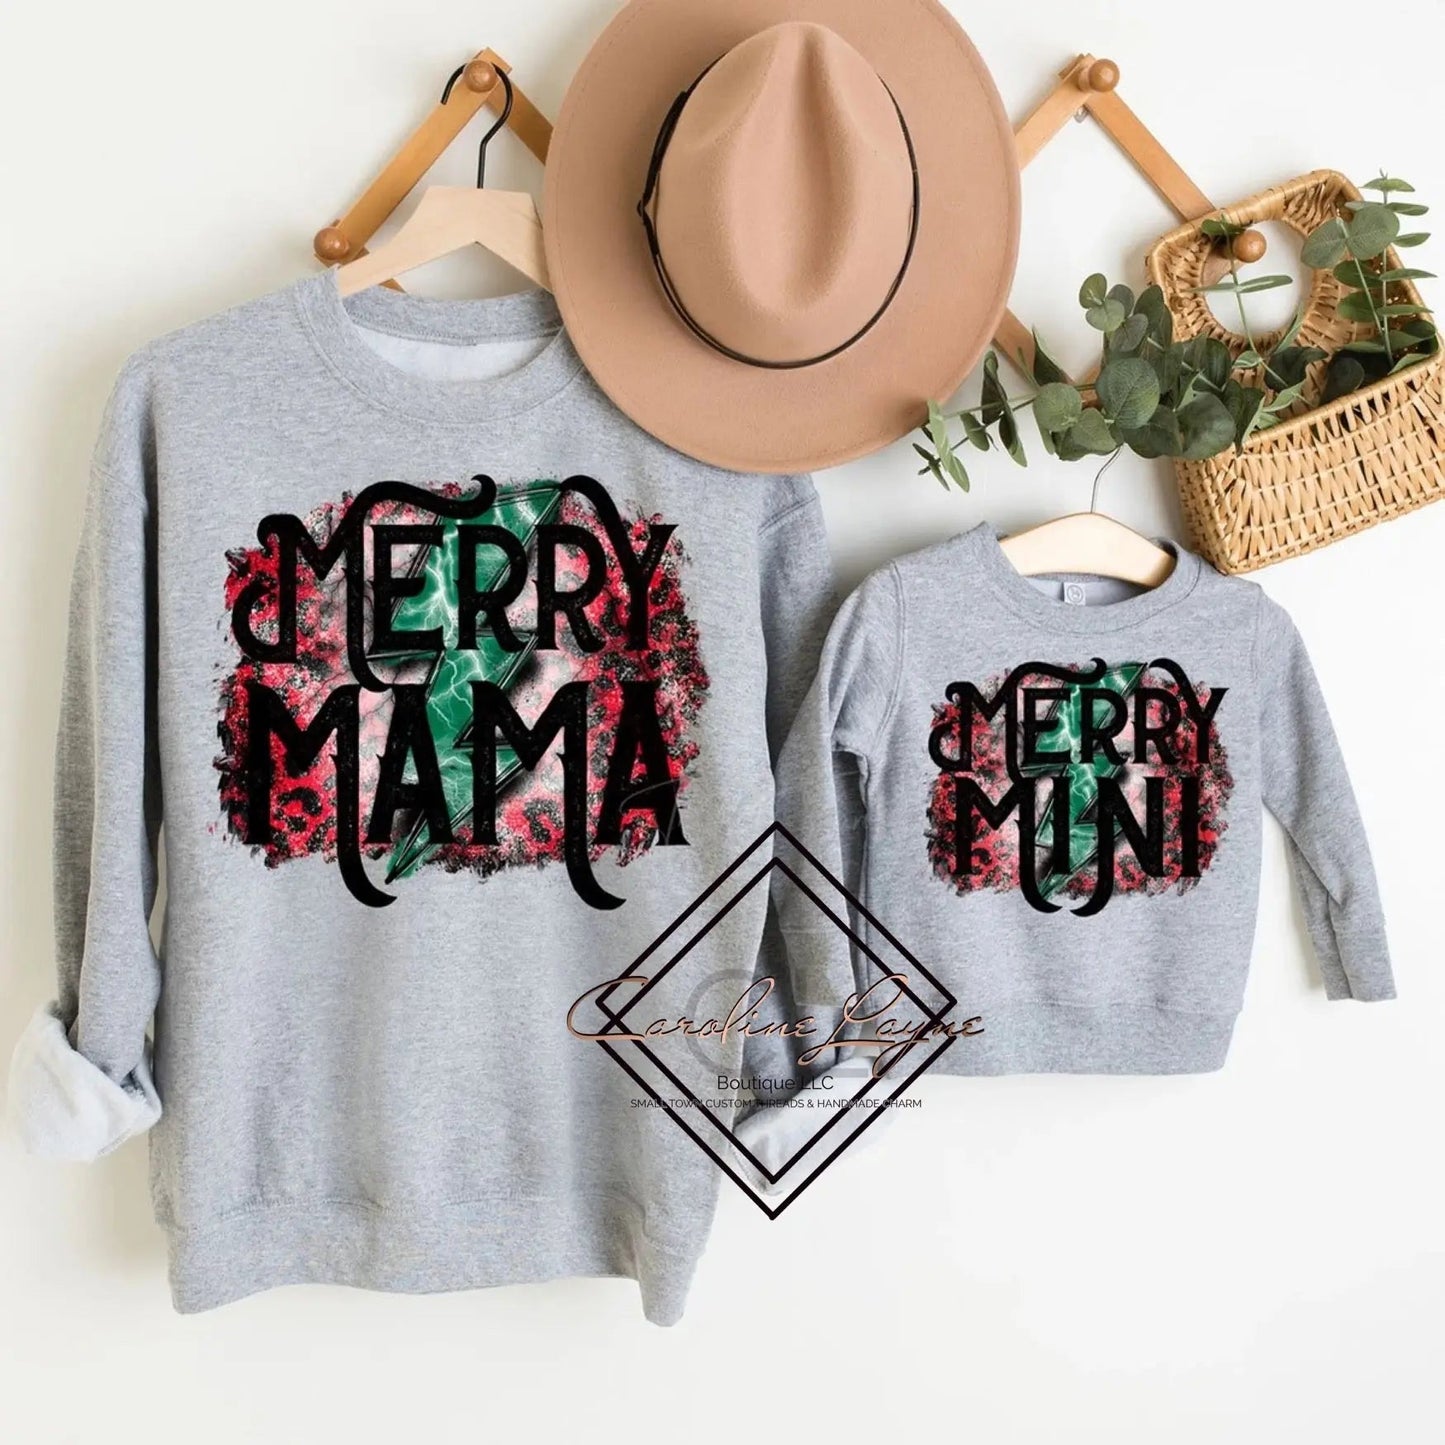 Merry Mama Mini Set Sweatshirt - Caroline Layne Boutique LLC